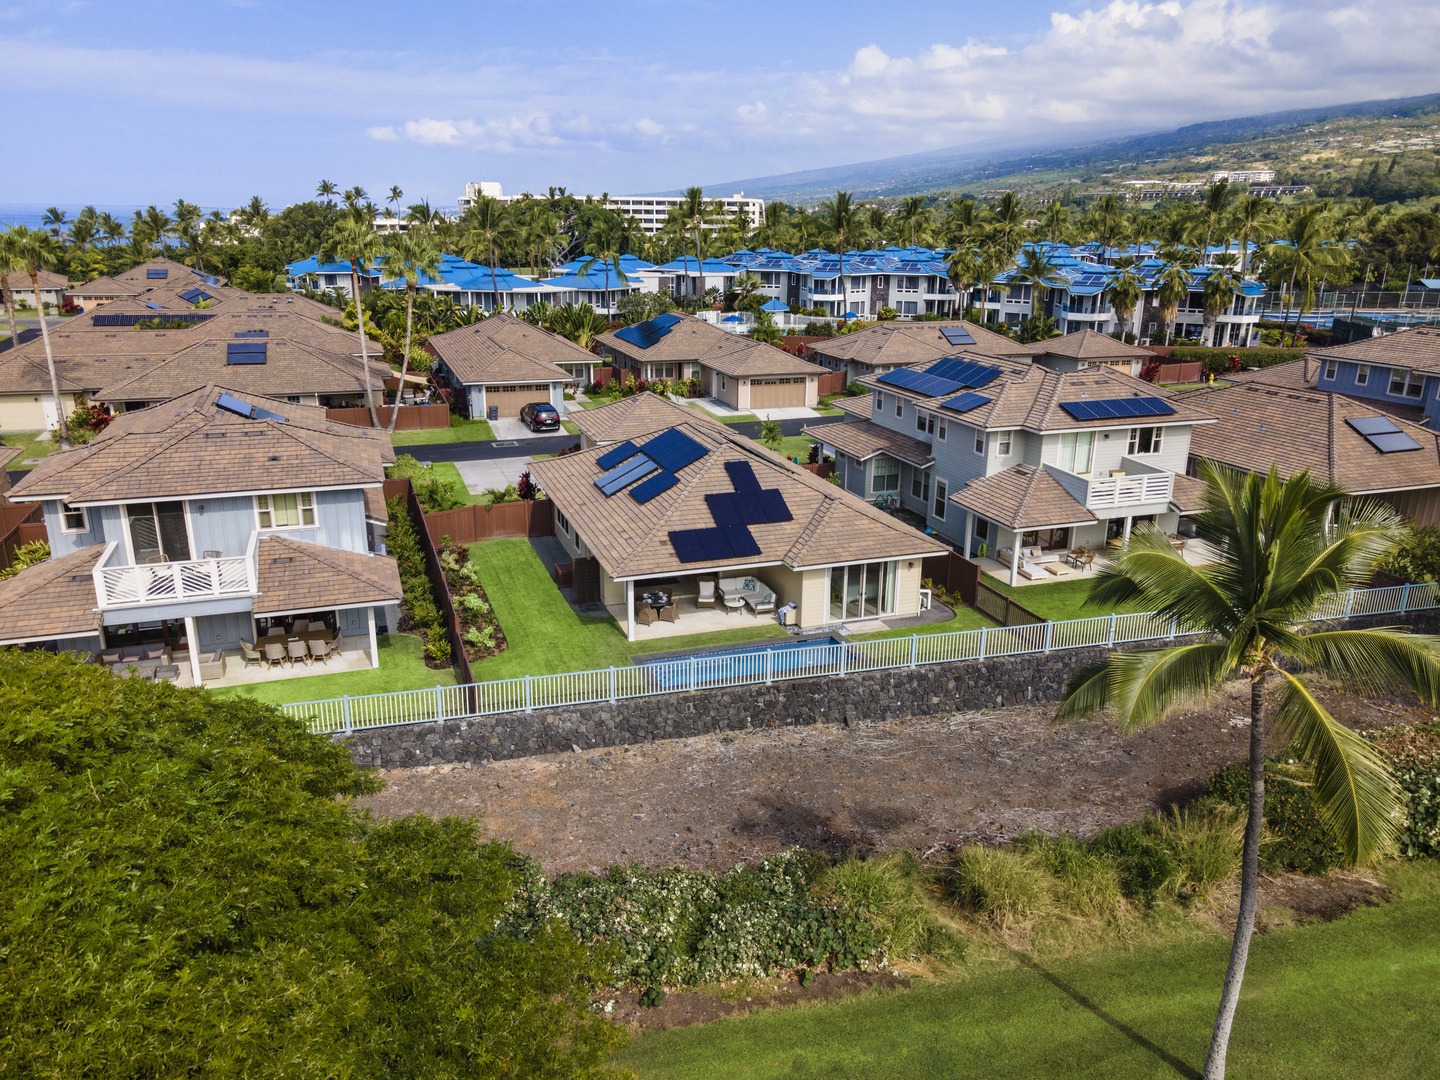 Kailua-Kona Vacation Rentals, Holua Kai #8 - Aerial